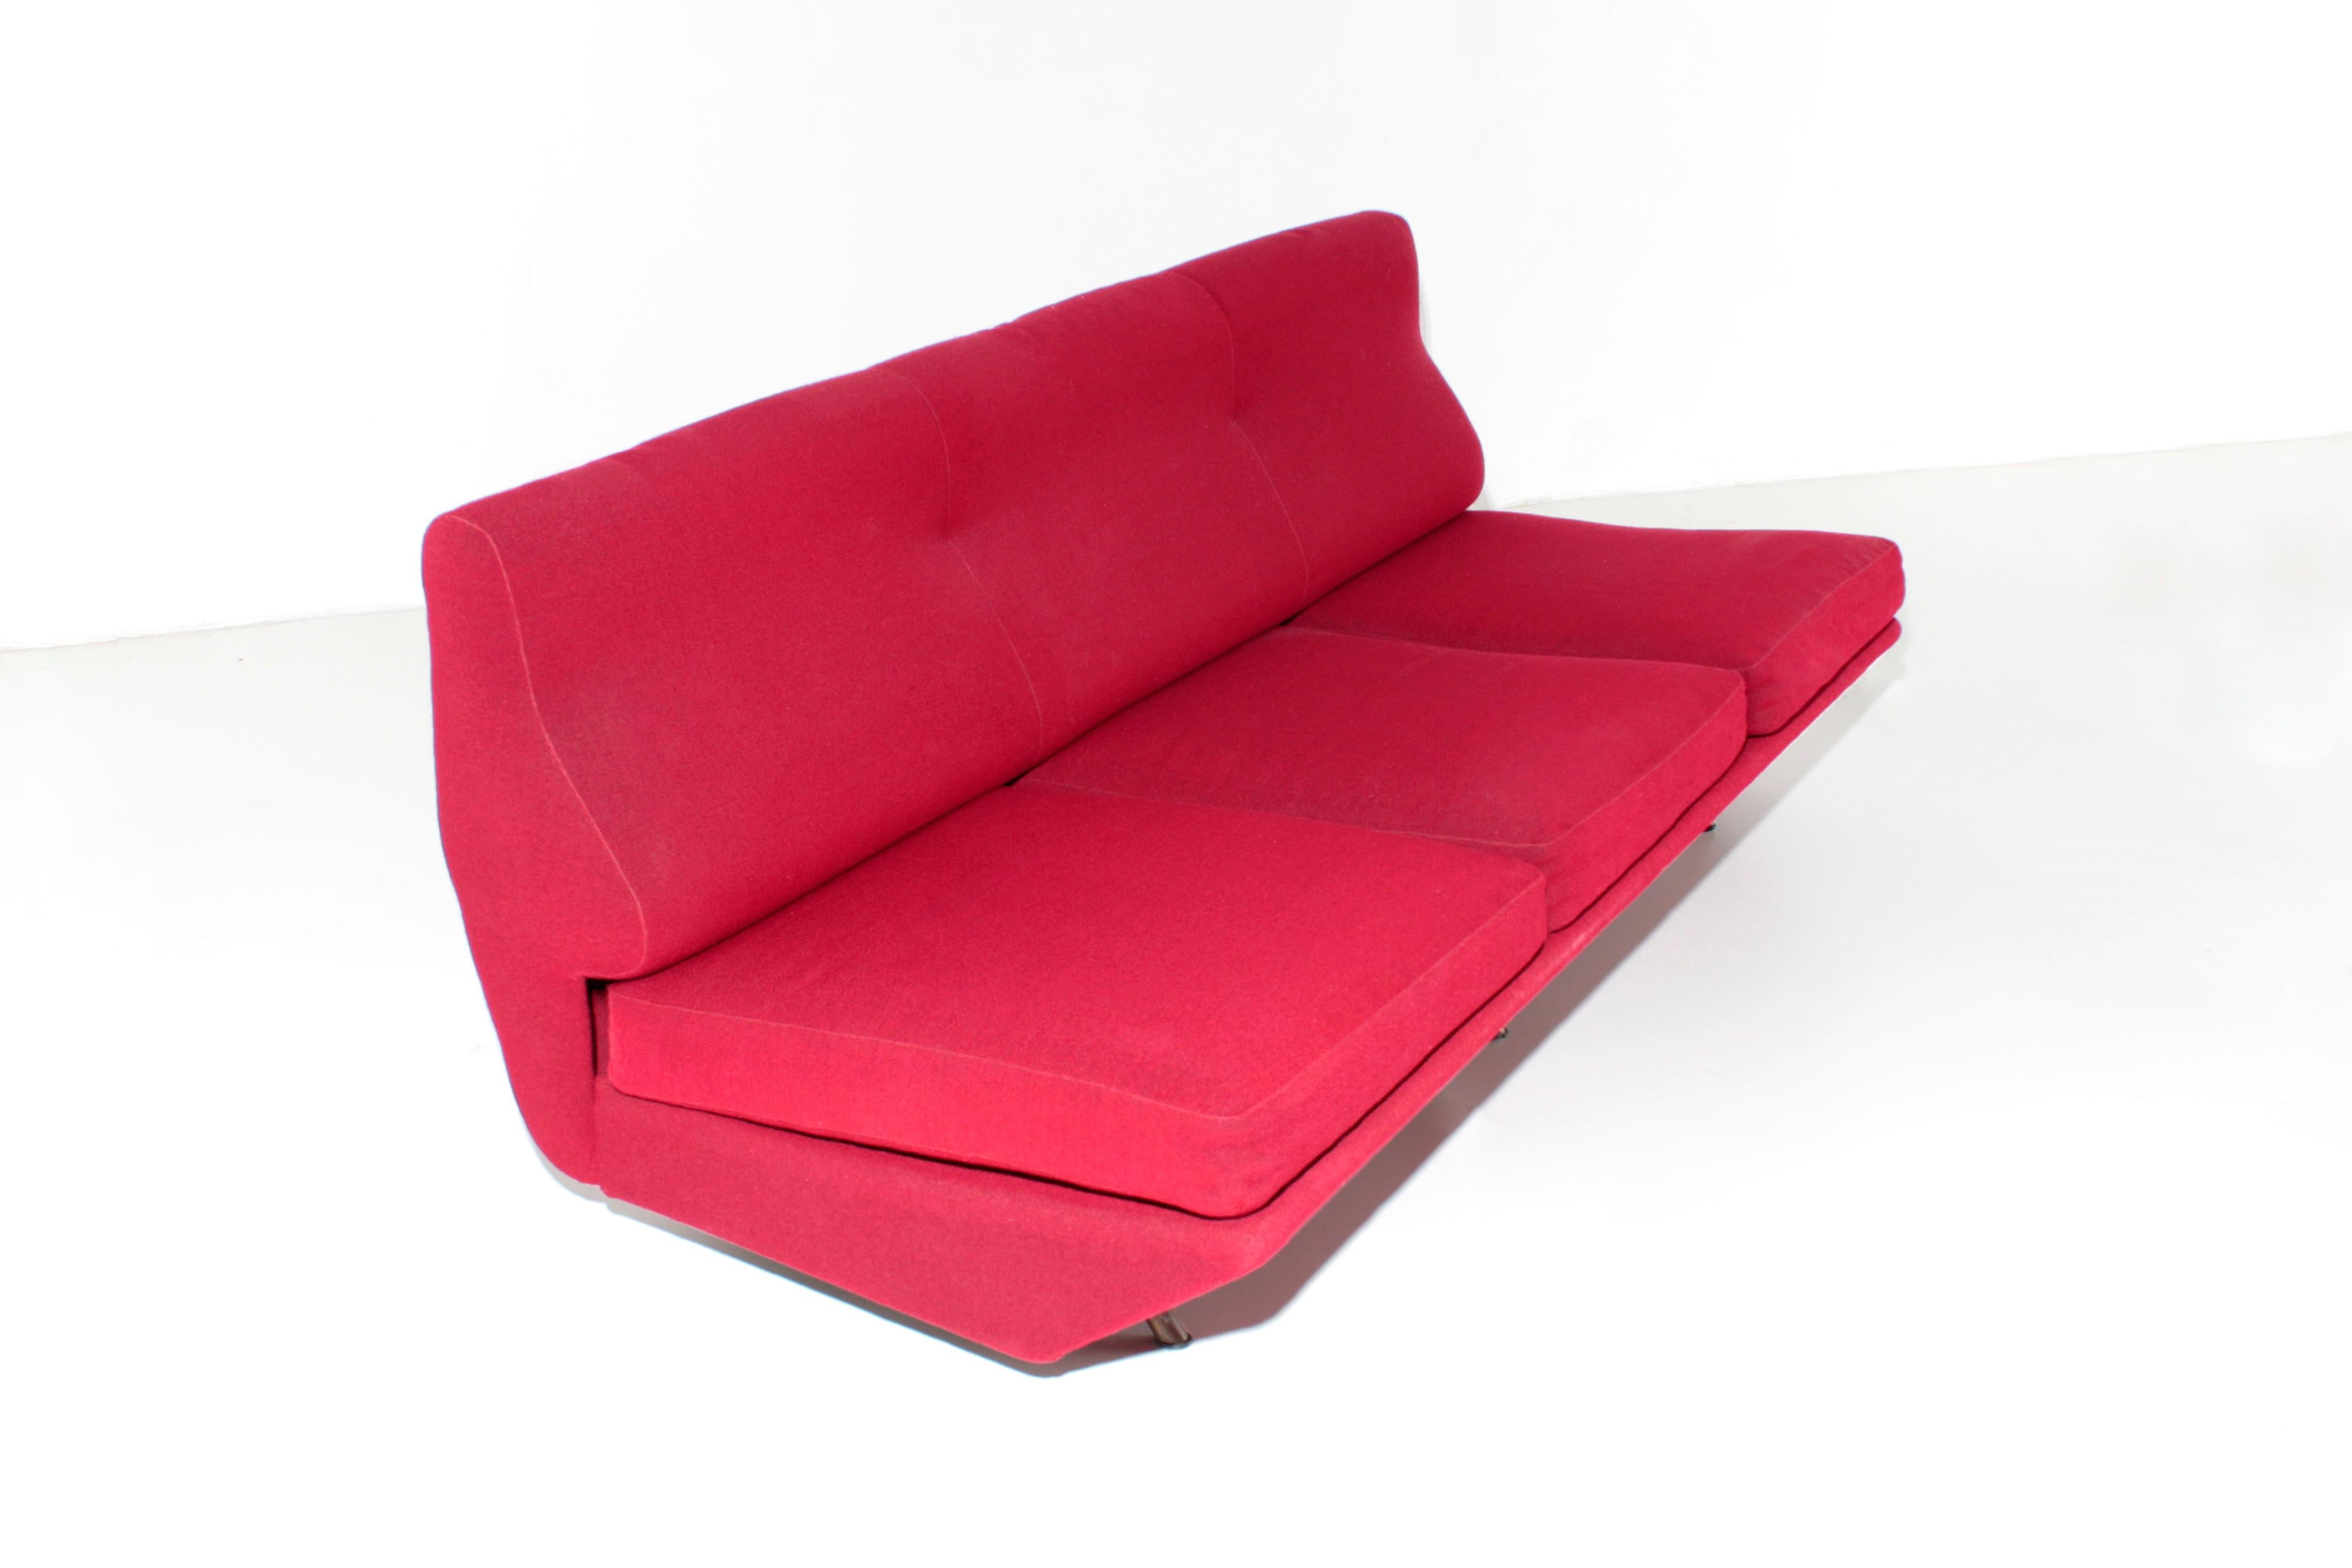 Italian Marco Zanuso Sleep-o-Matic Midcentury Sofa Bed in Red Fabric, 1954